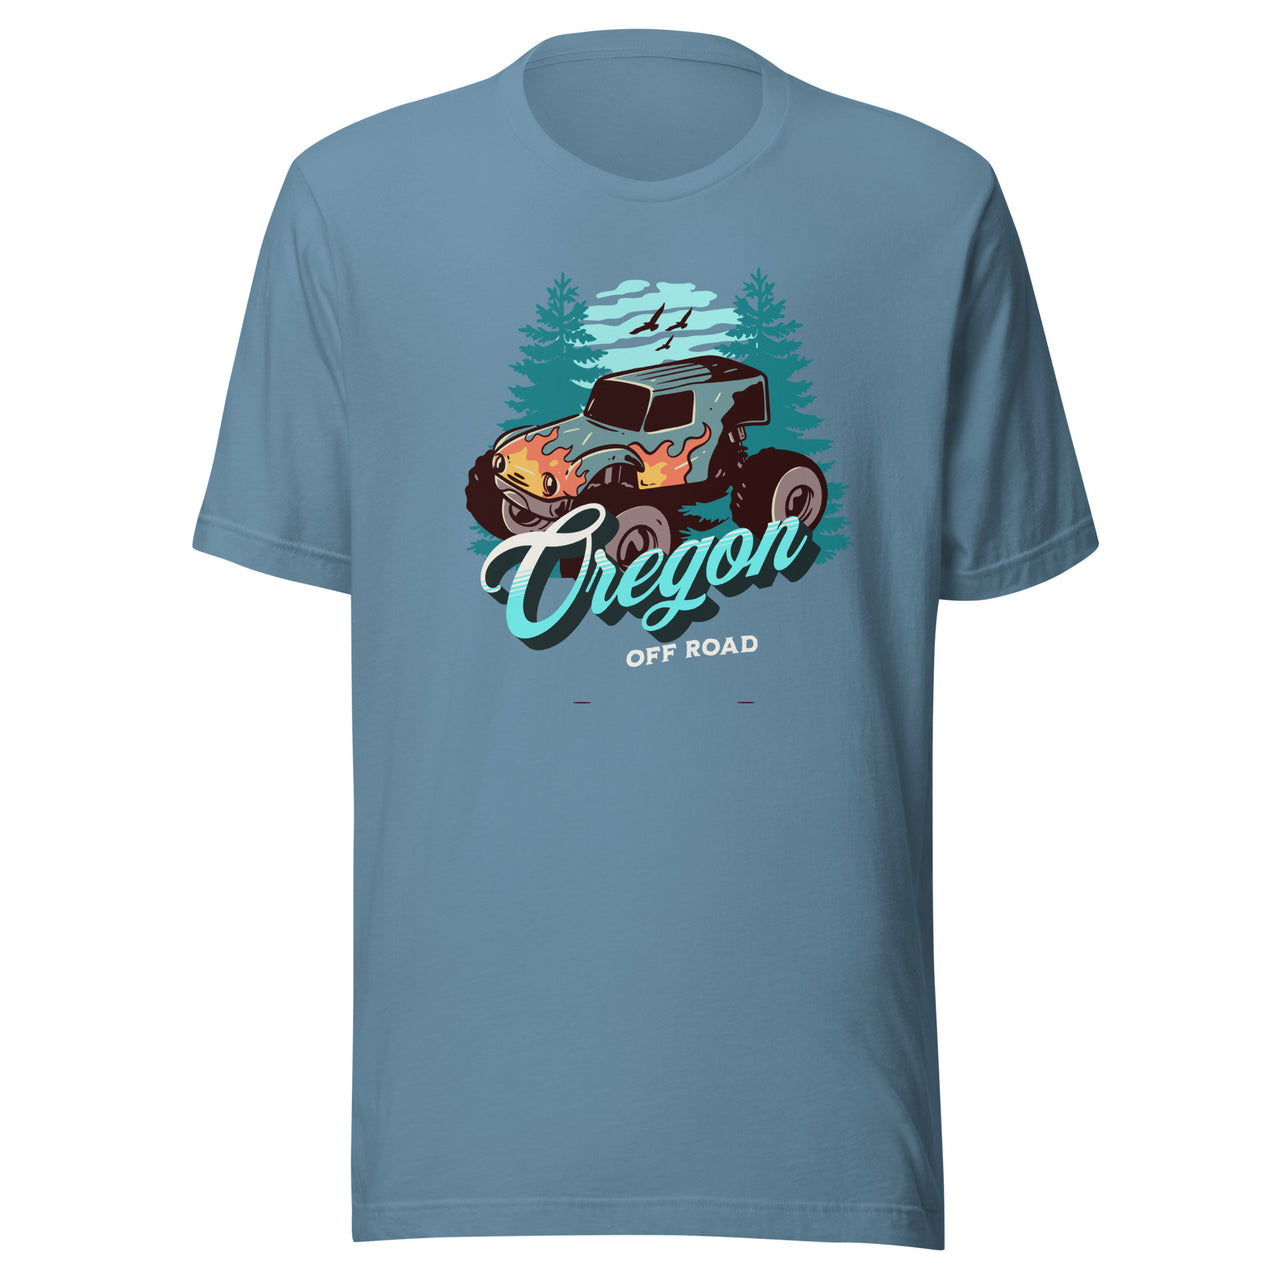 Oregon Off Road - Unisex t-shirt